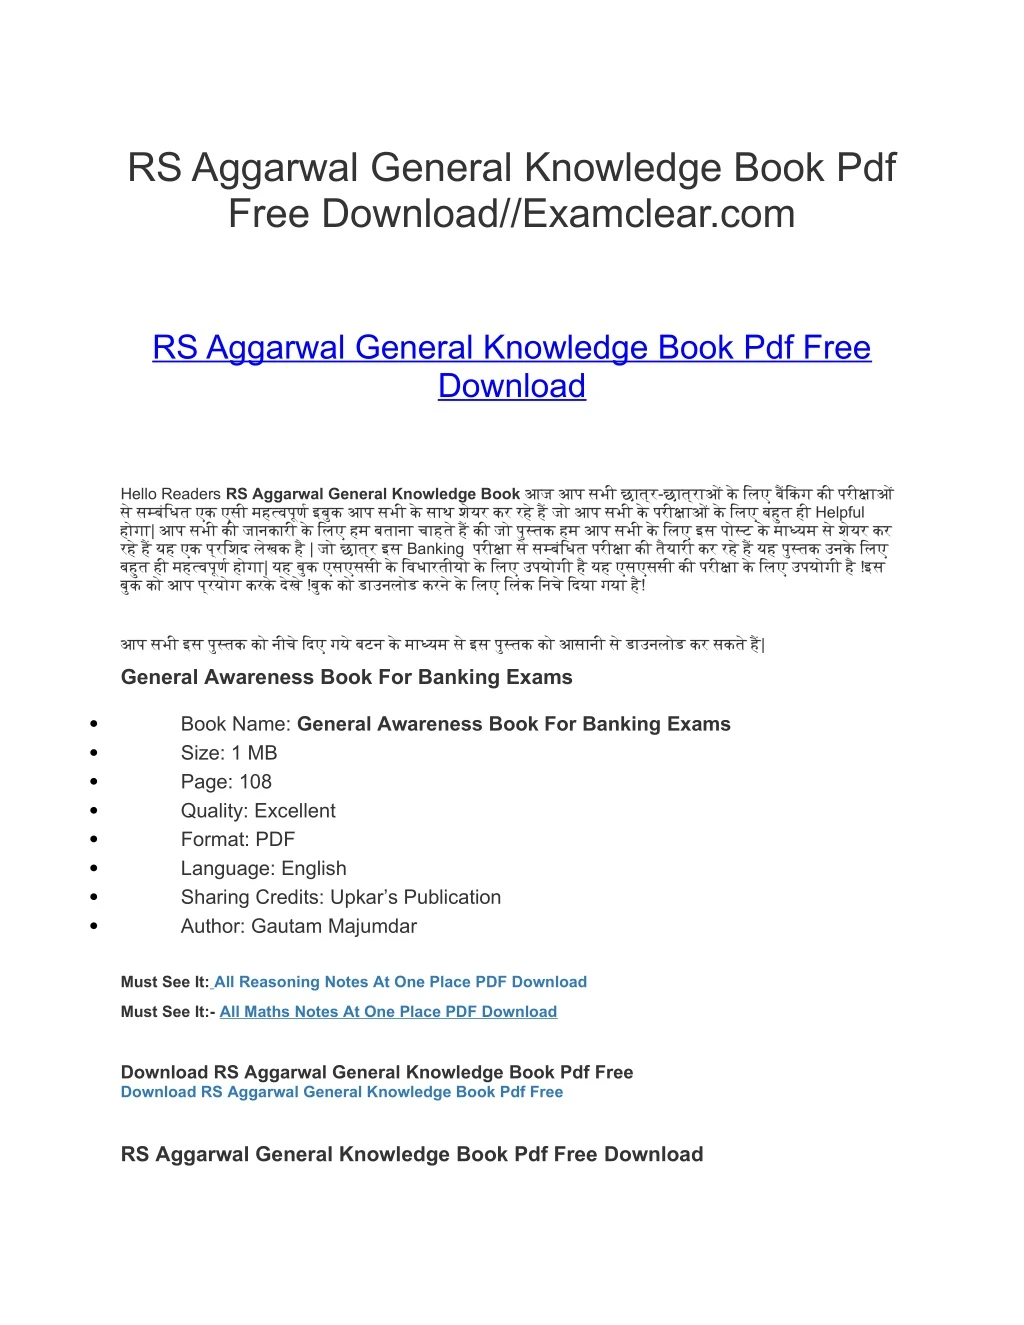 rs aggarwal general knowledge book pdf free